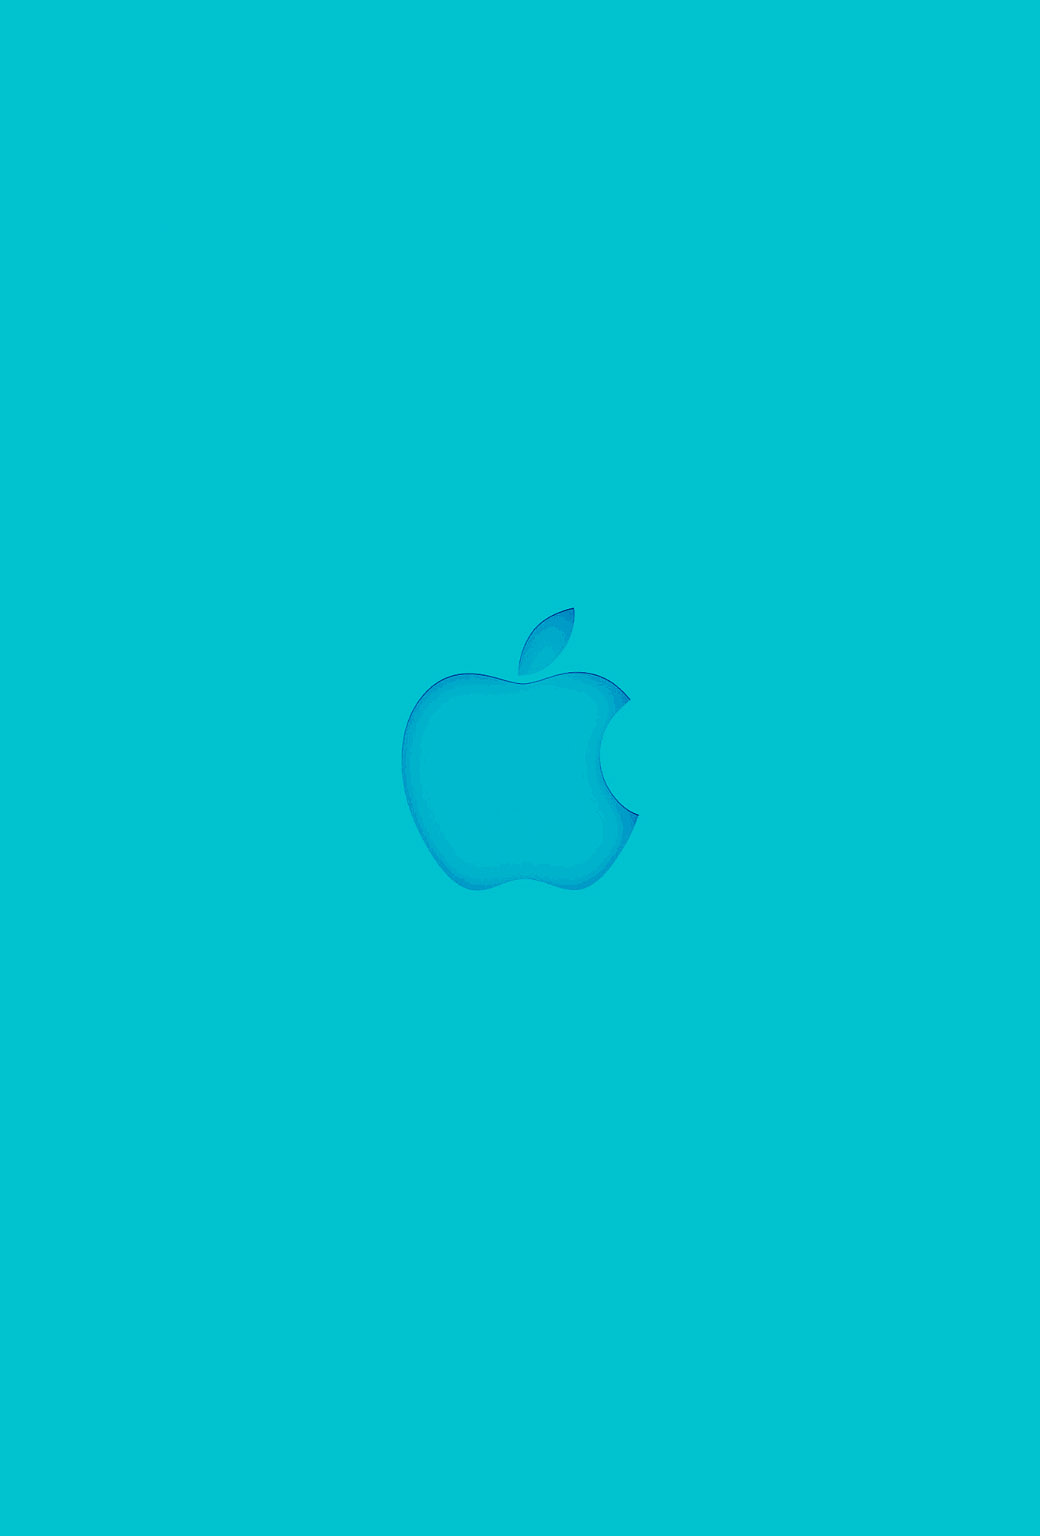 freeios7com apple wallpaper sky apple iphone5 parallax